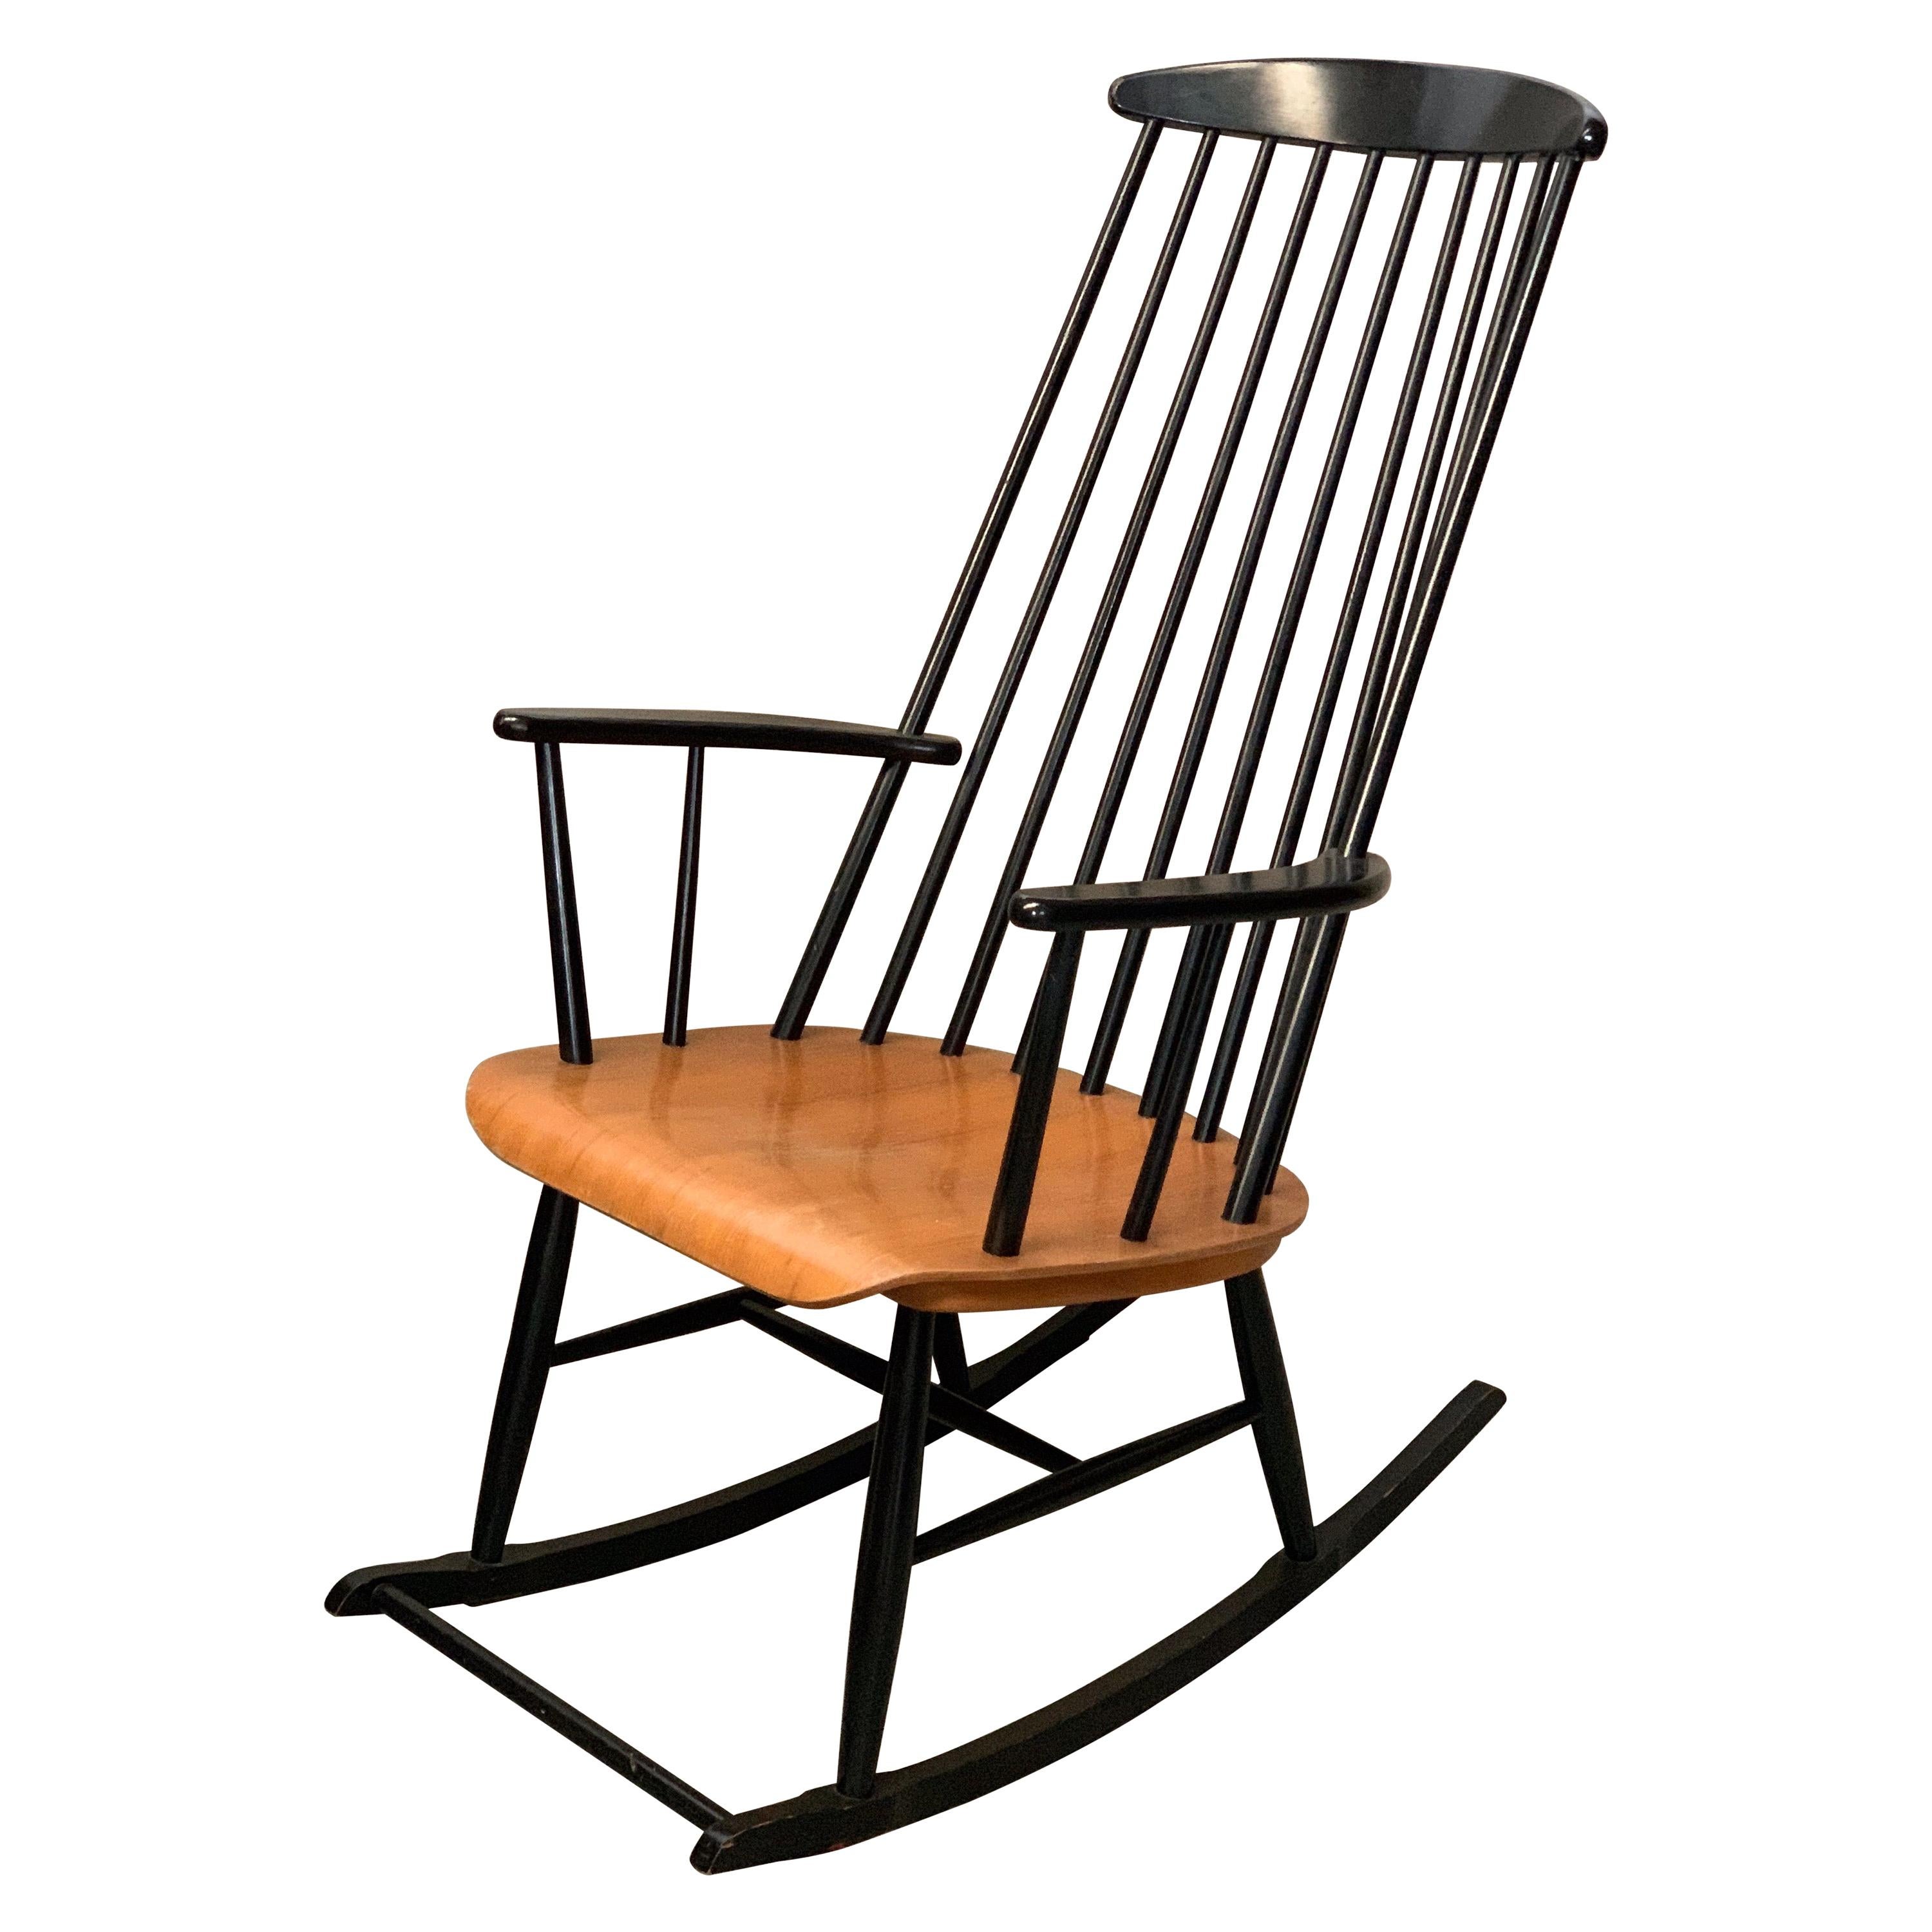 60/70's Rocking Chair, Mademoiselle Rocking Chair, Inspired by Ilmari Tapiovaara